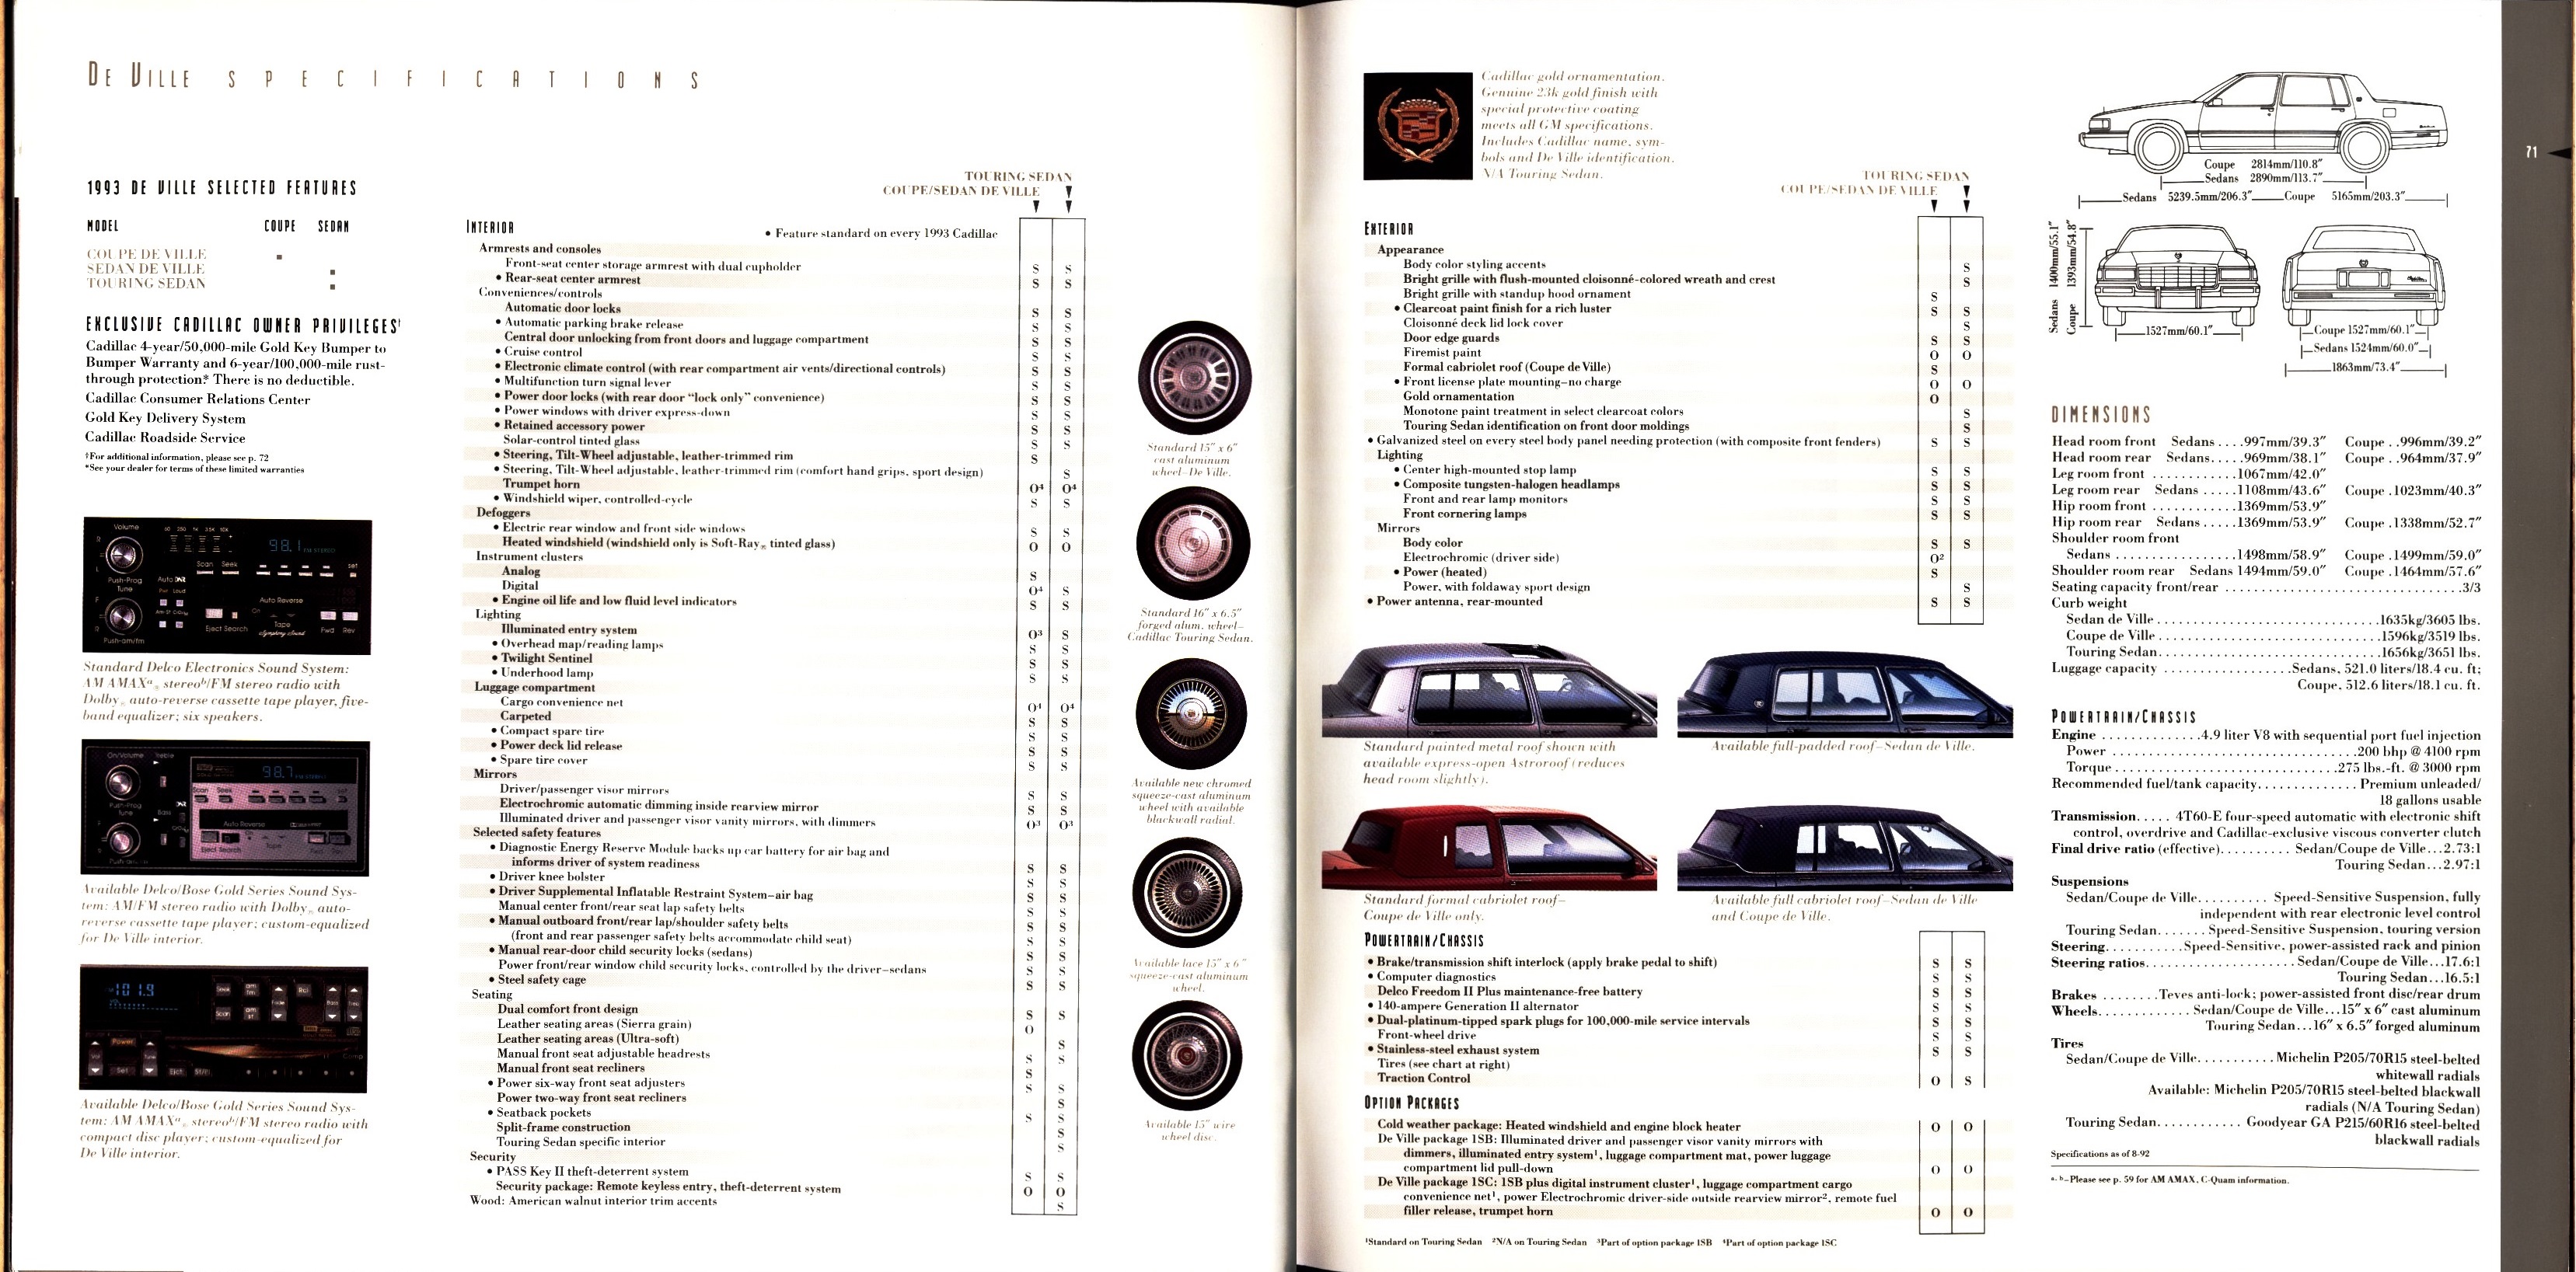 1993 Cadillac Full Line Prestige Brochure 70-71